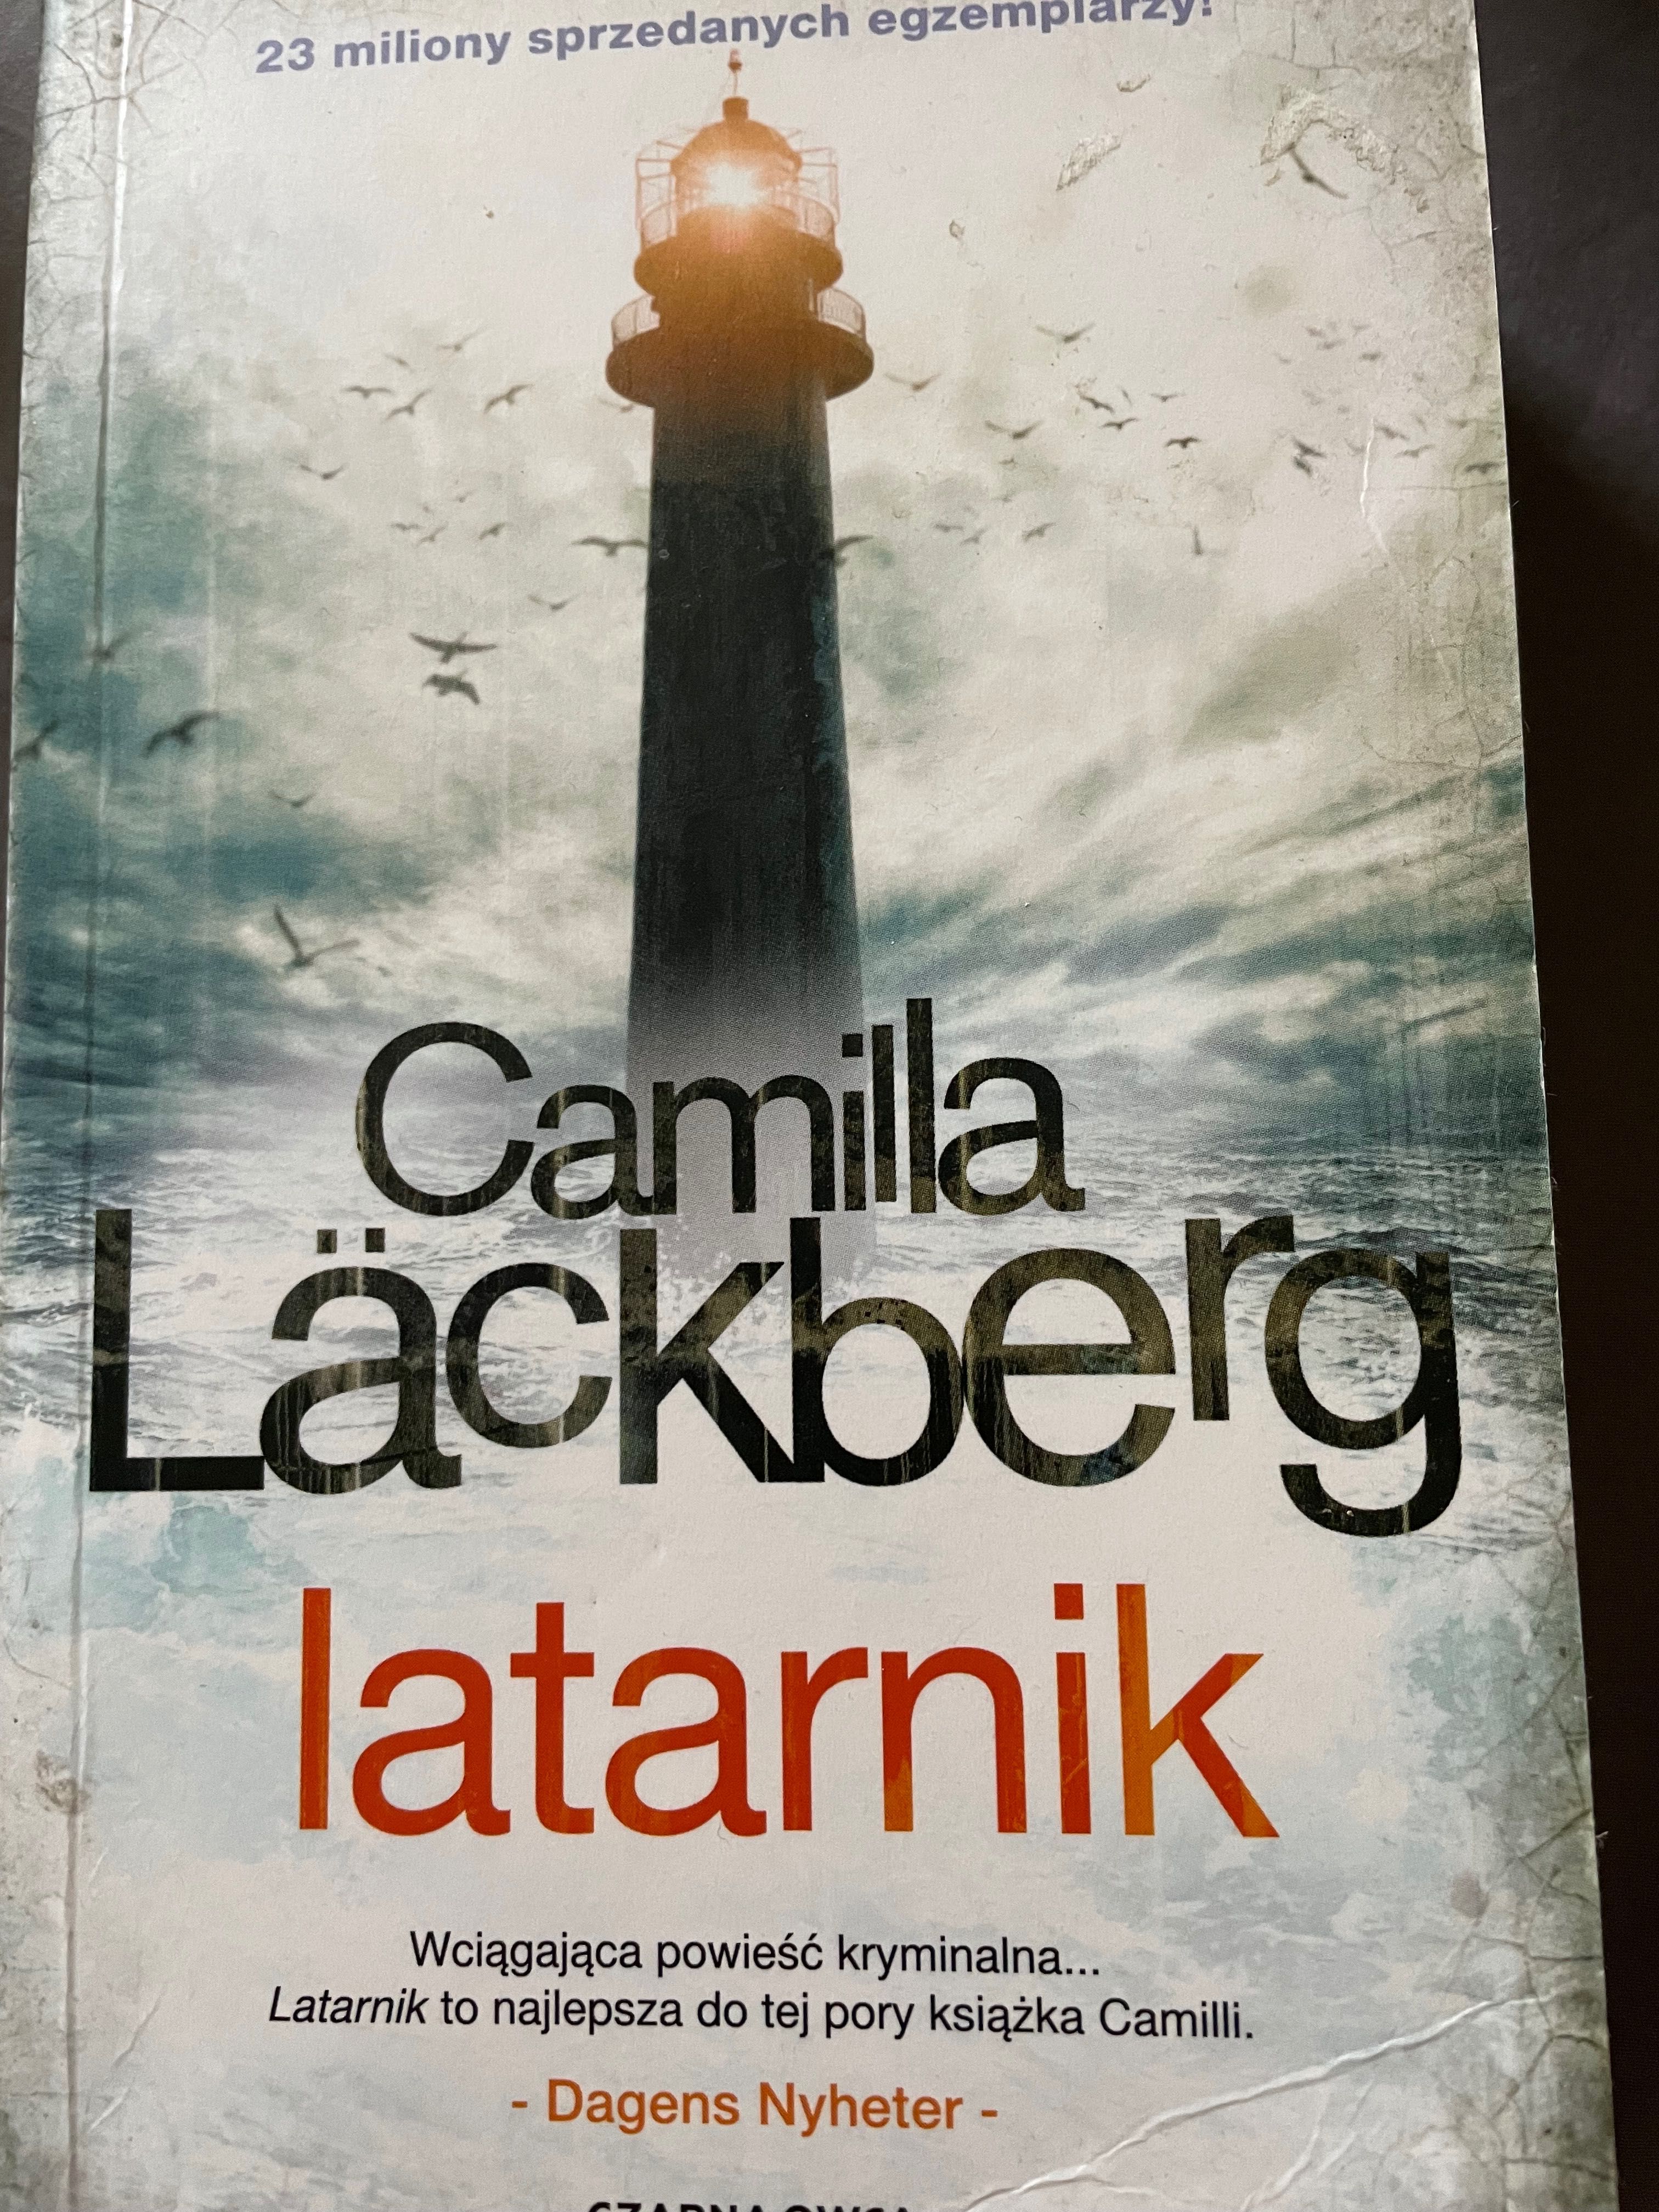 Latarnik Camilla Lackberg